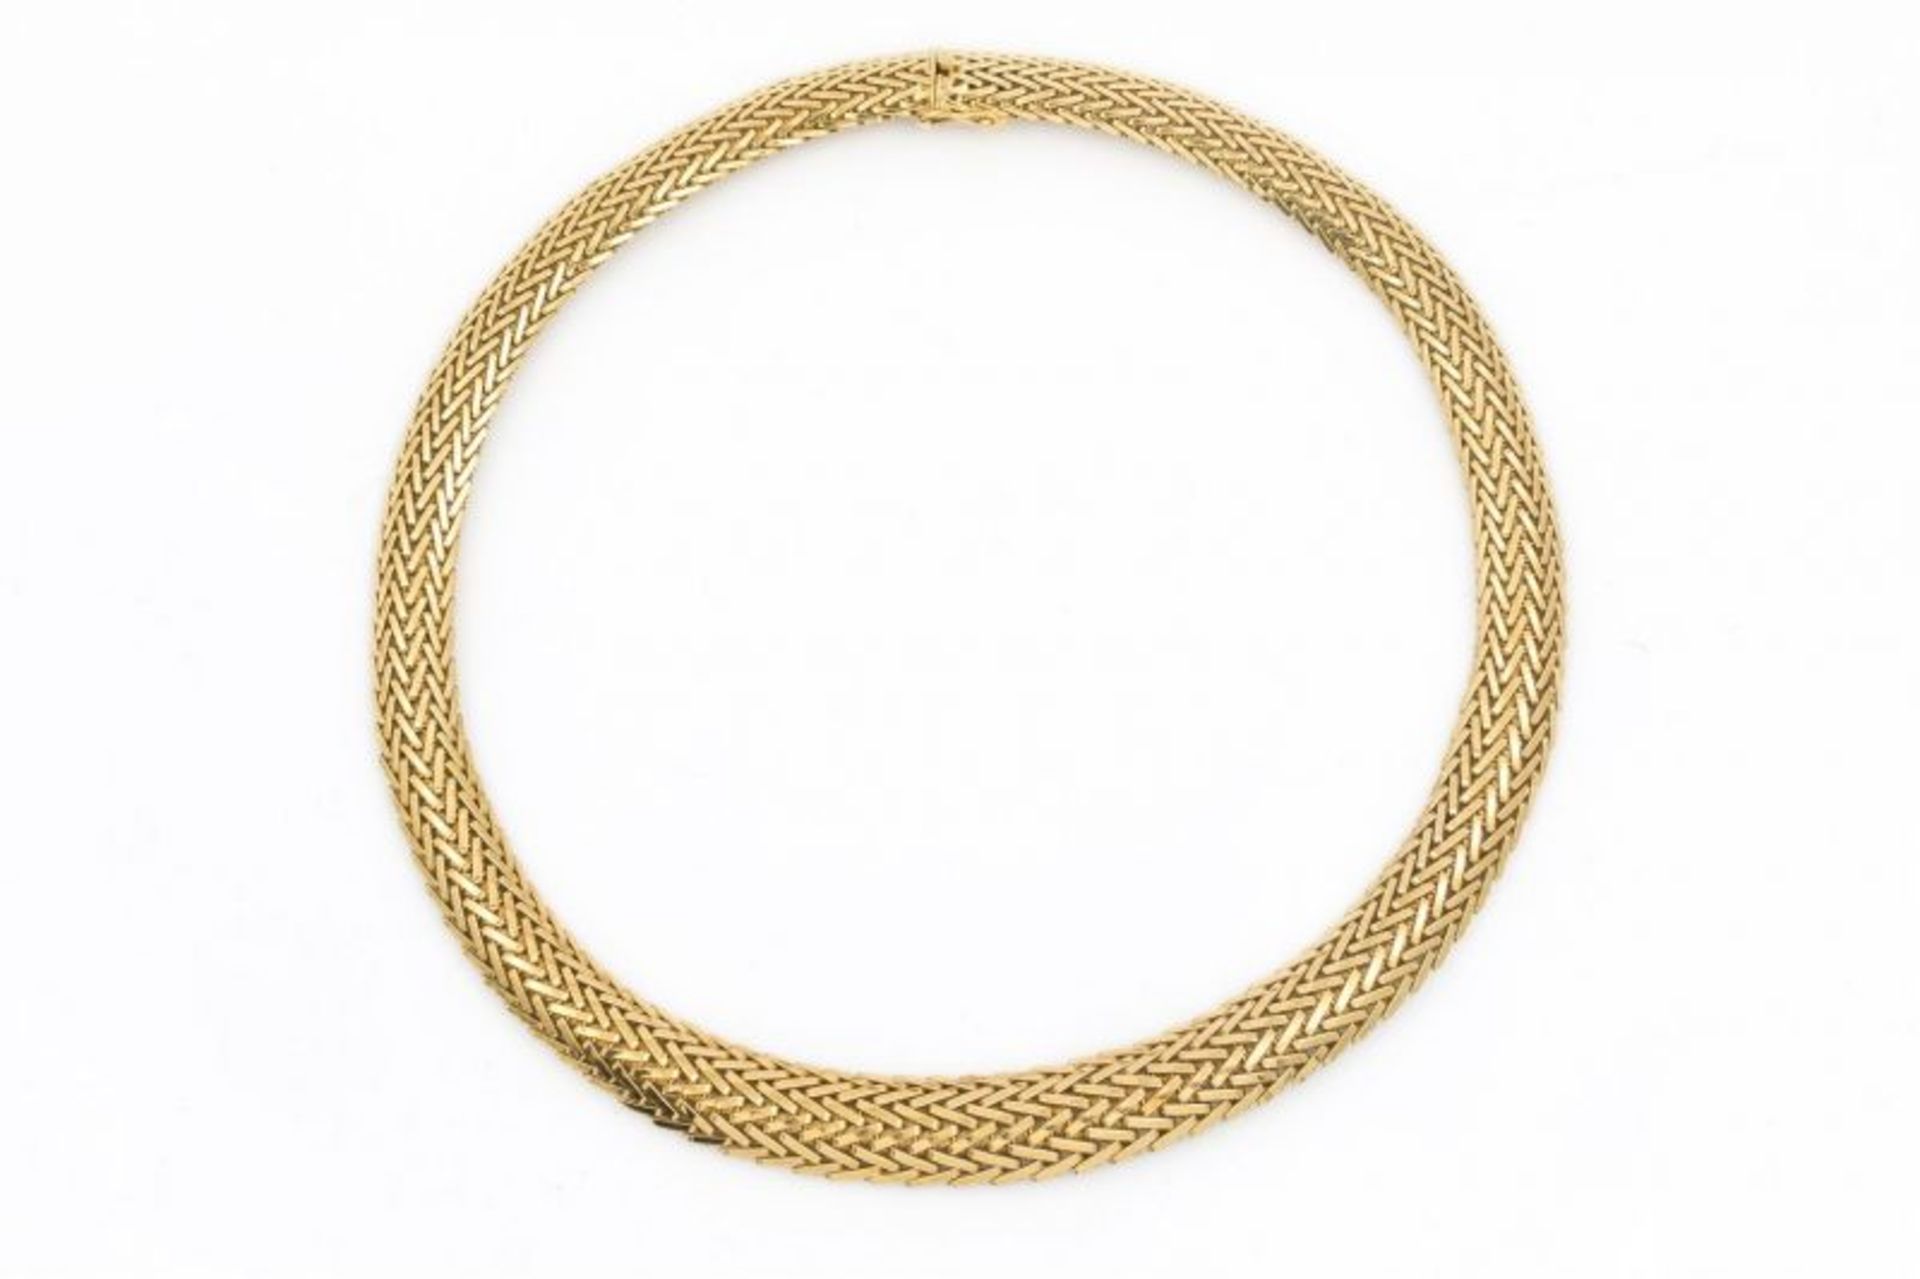 18 krt. gouden Milanees gevlochten collier, lengte: 42 cm., breed: 10-13 mm., gewicht: 76 gram